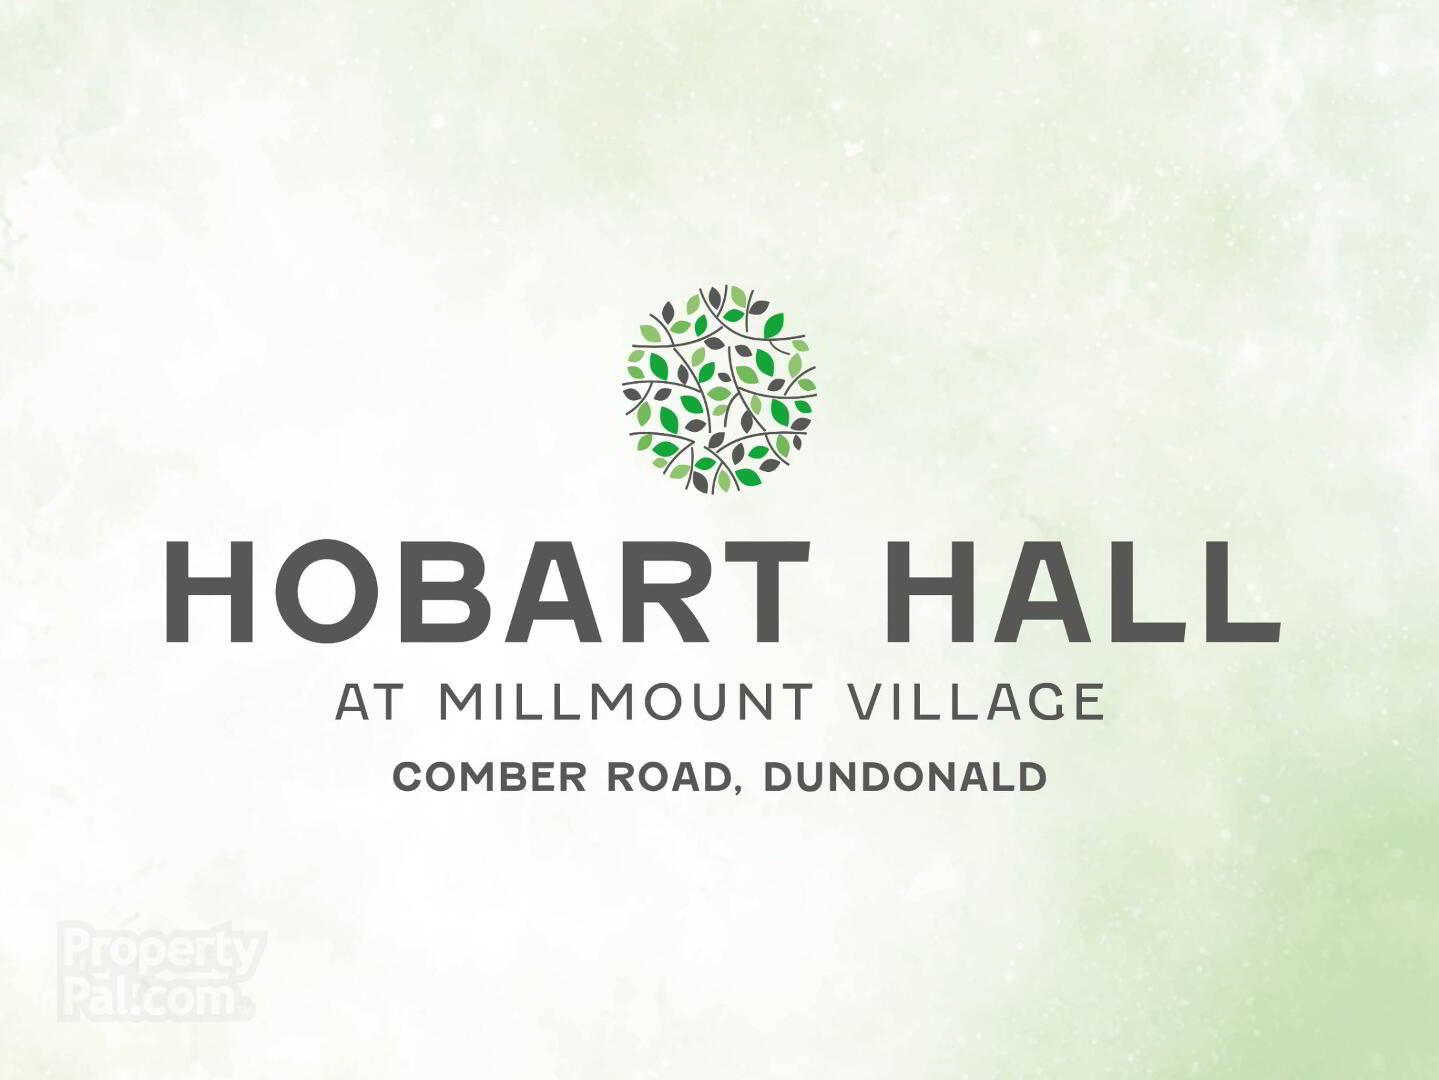 Hobart Hall